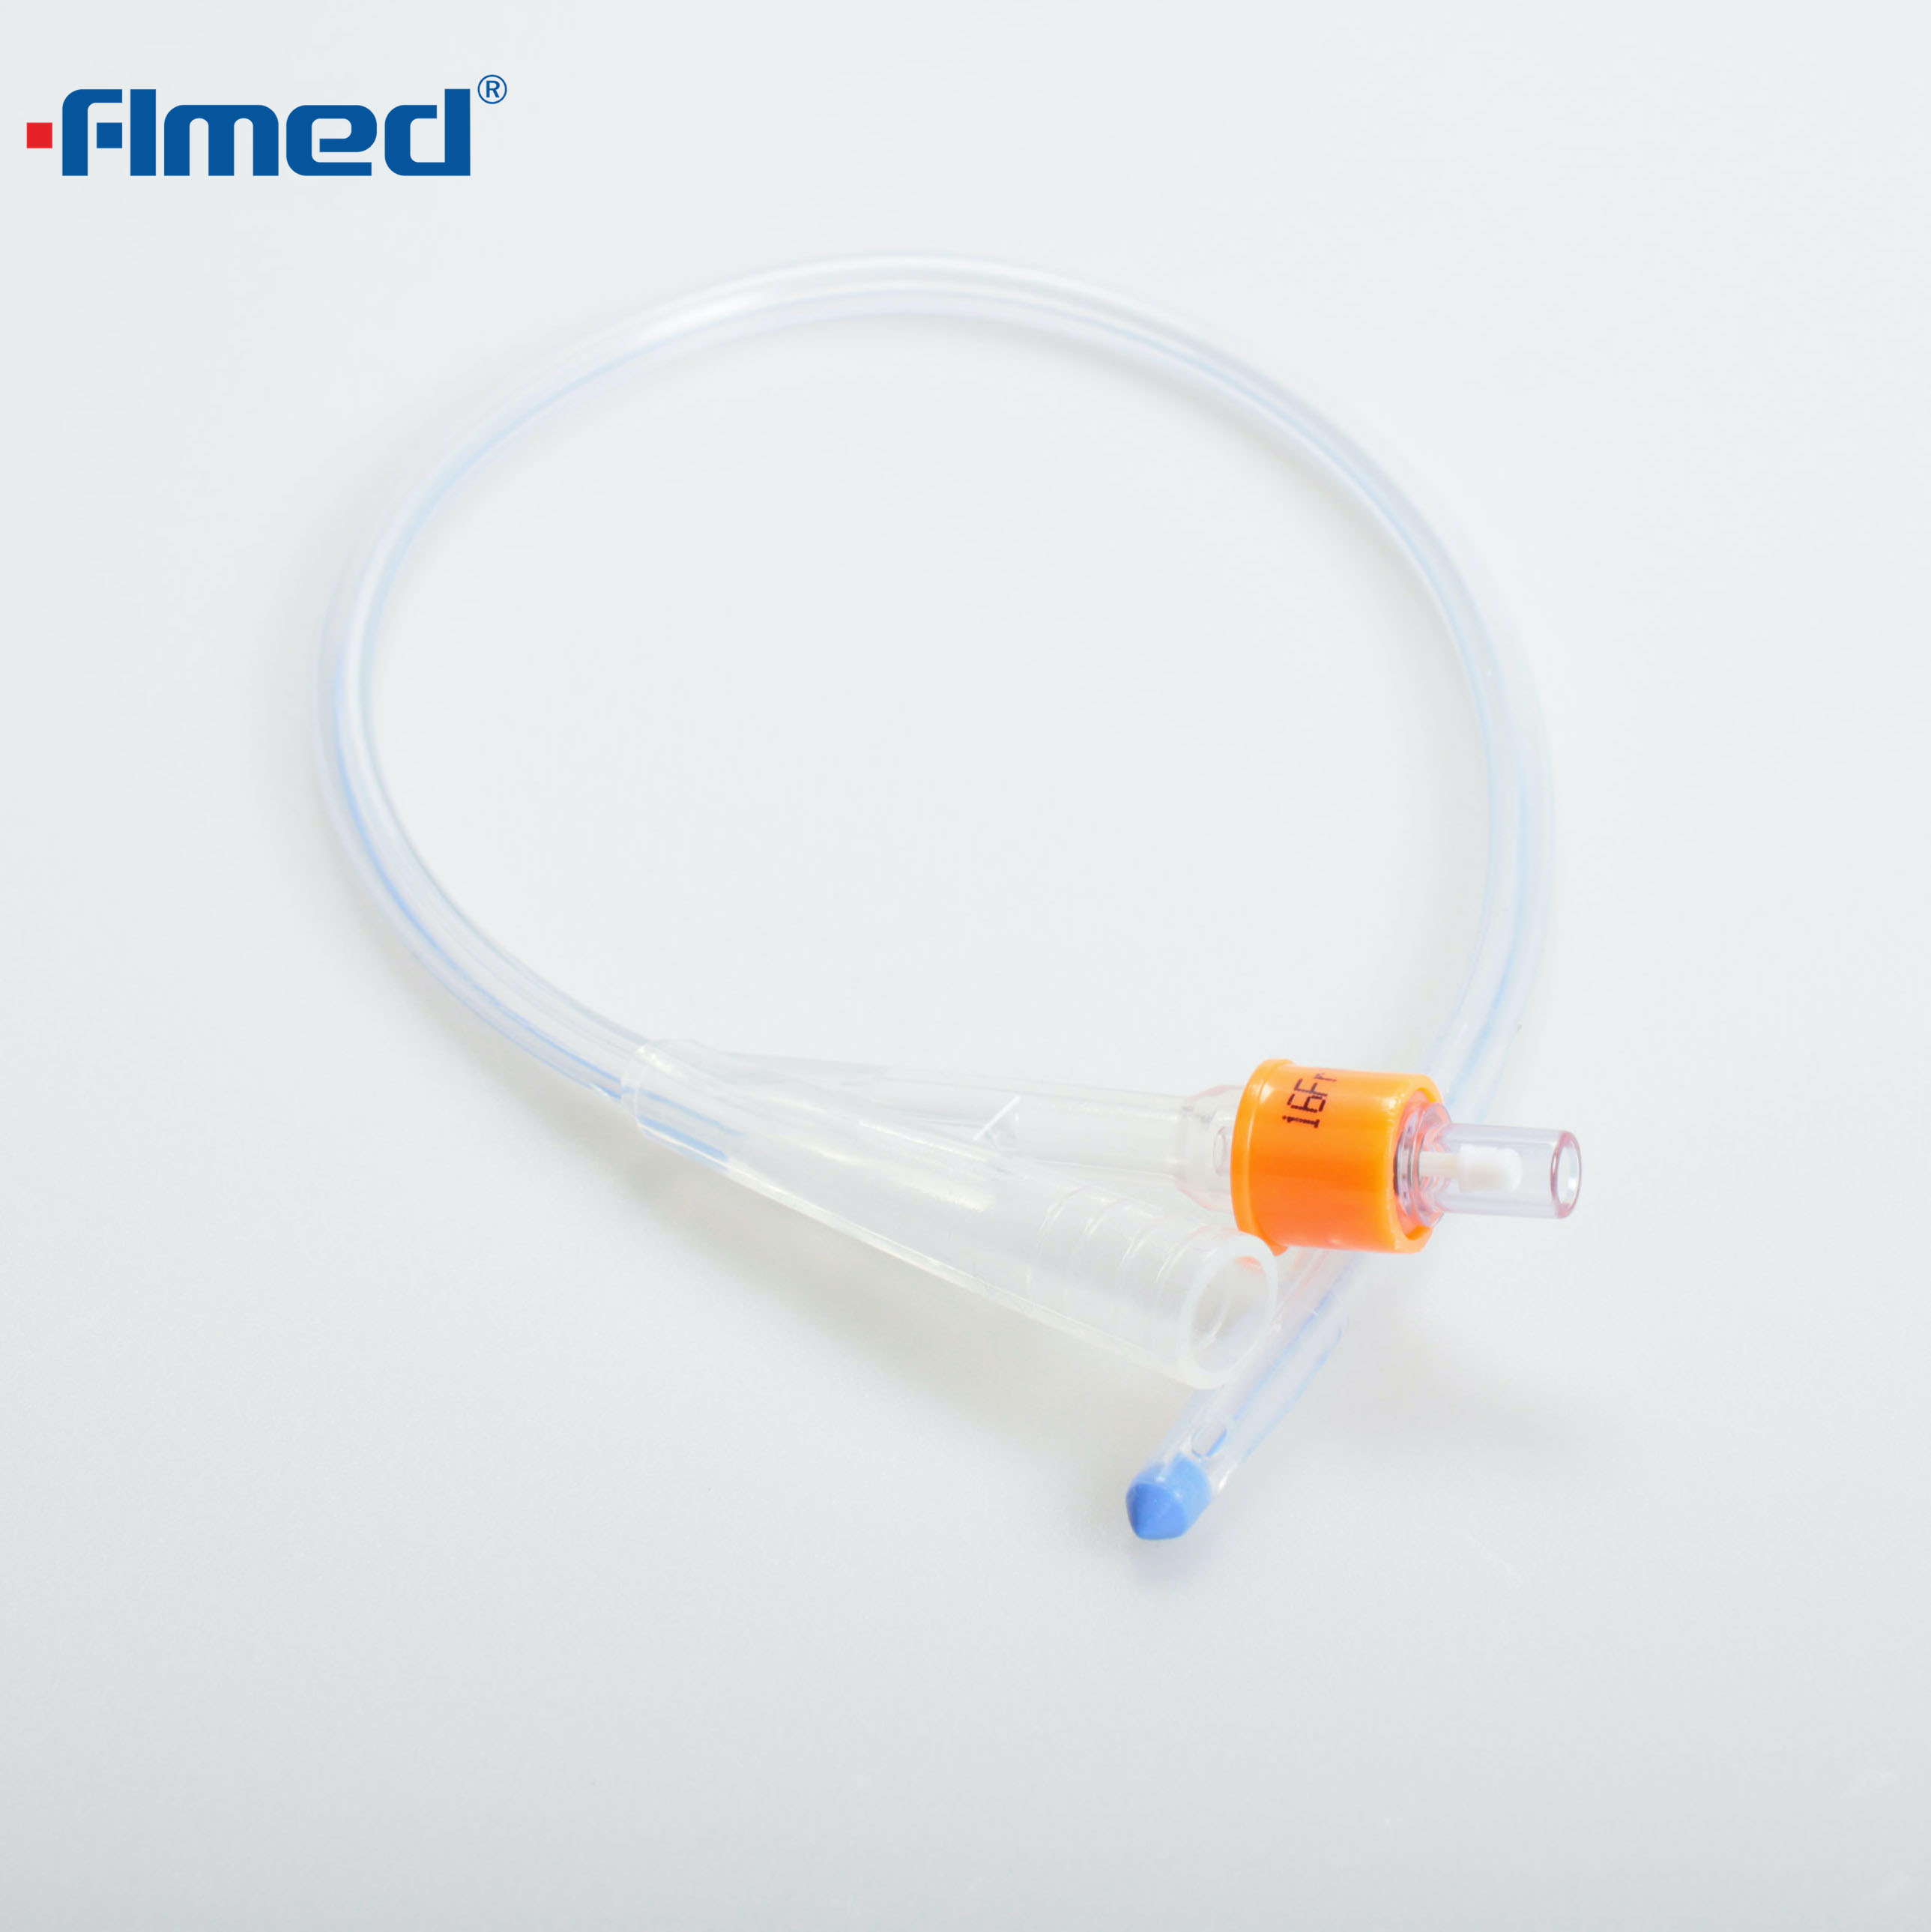 2-weg All-Silicone Foley Catheter